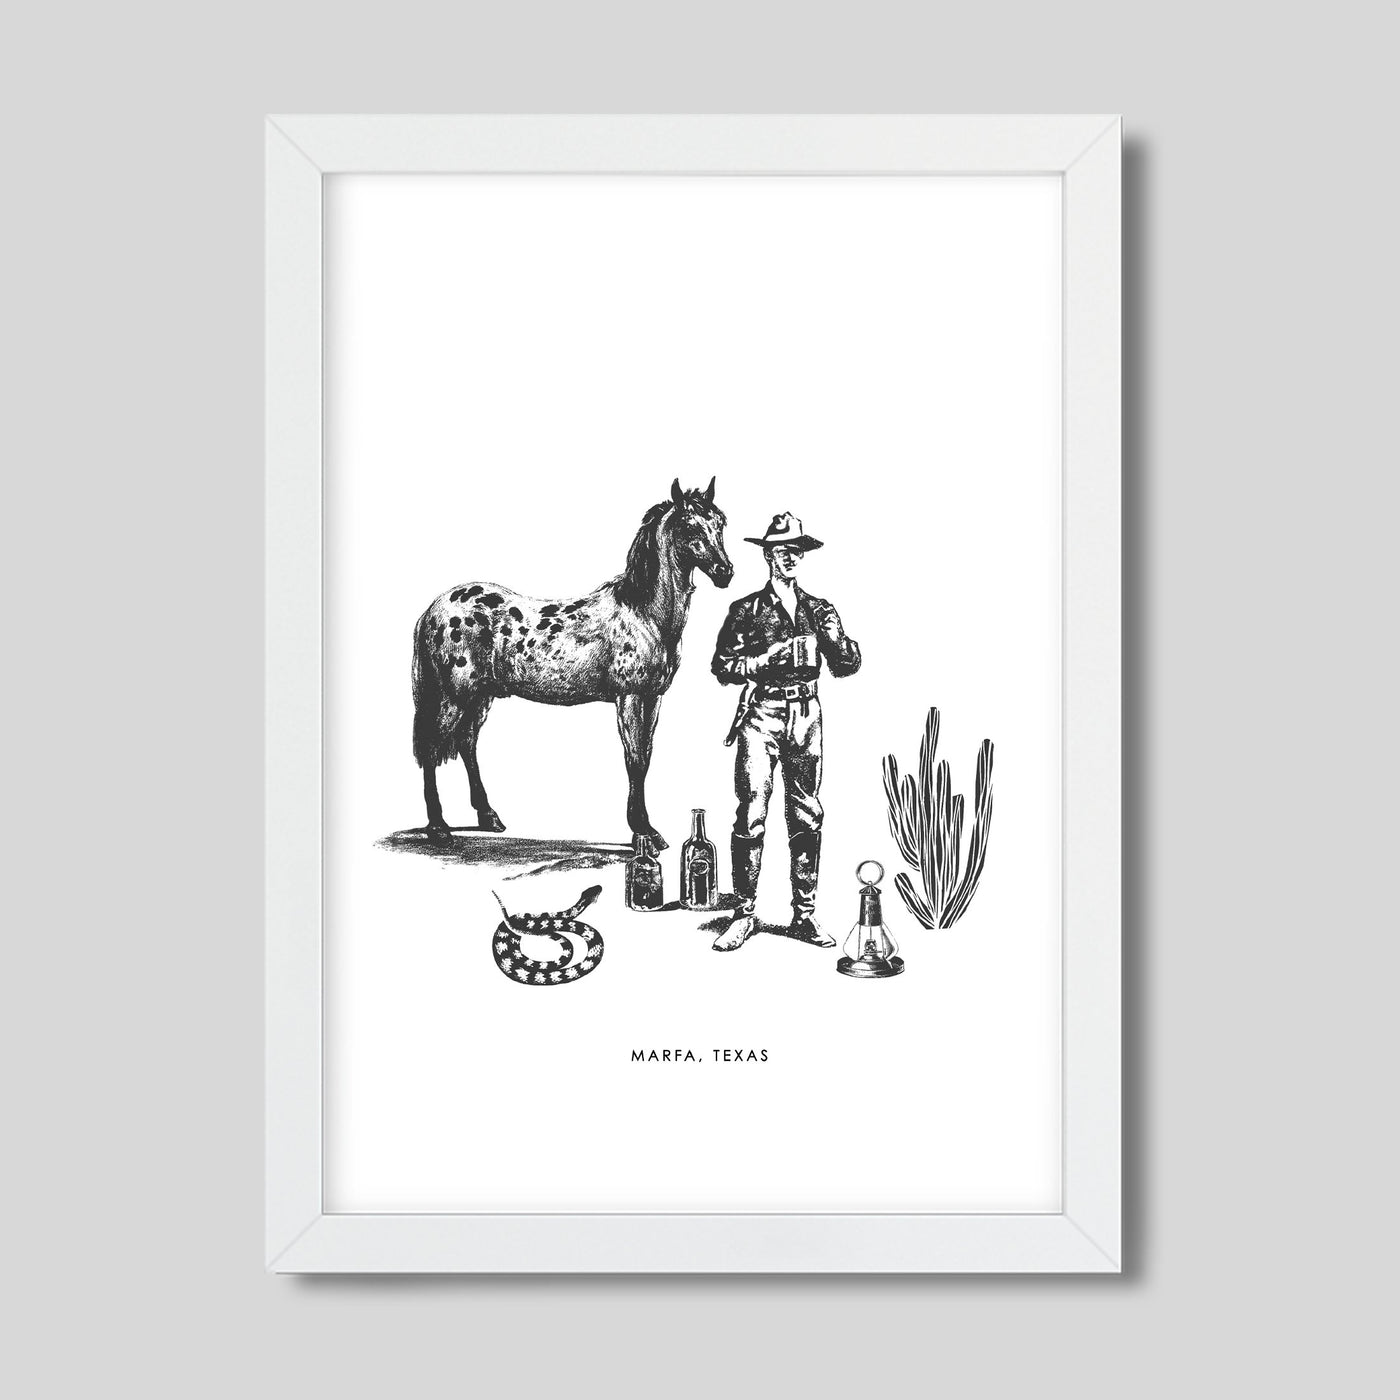 Gallery Prints Black / 8x10 / White Frame Marfa Cowboy Print dombezalergii